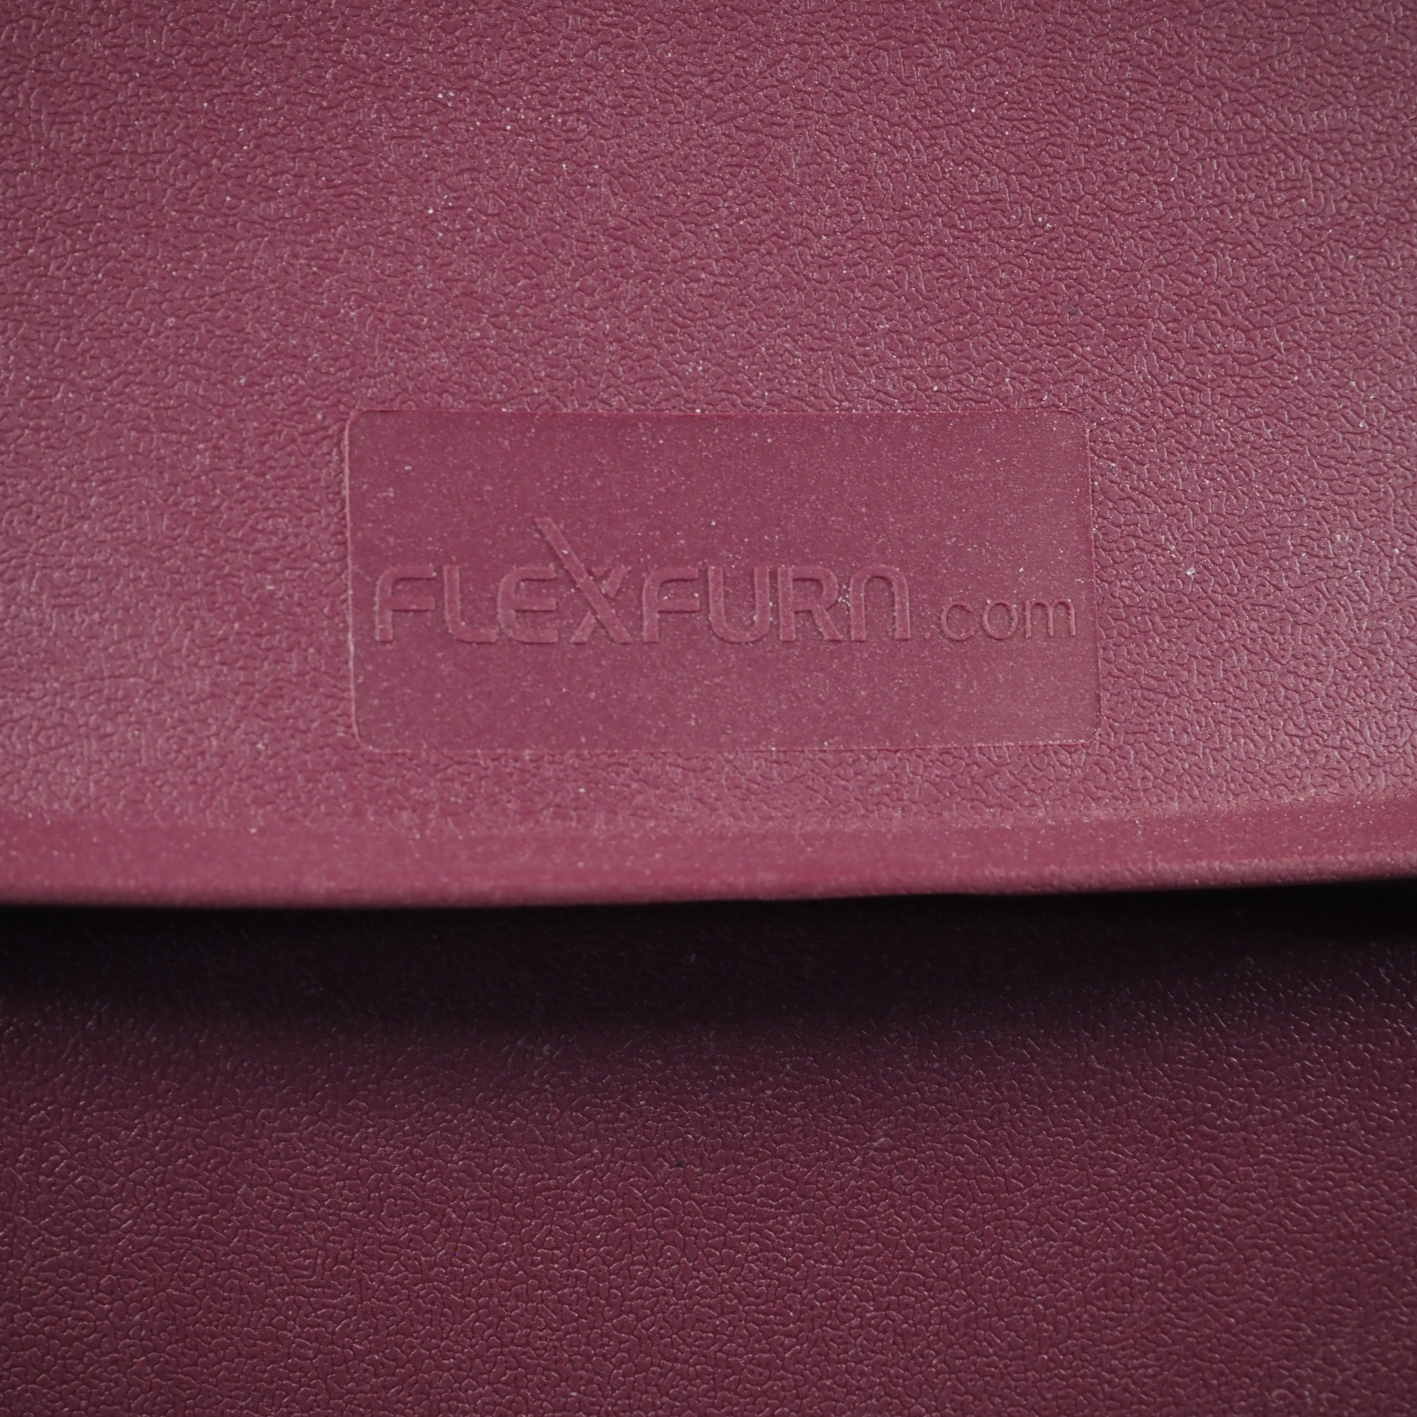 Folding chair 'Europa' by Flexfurn - Burgundy